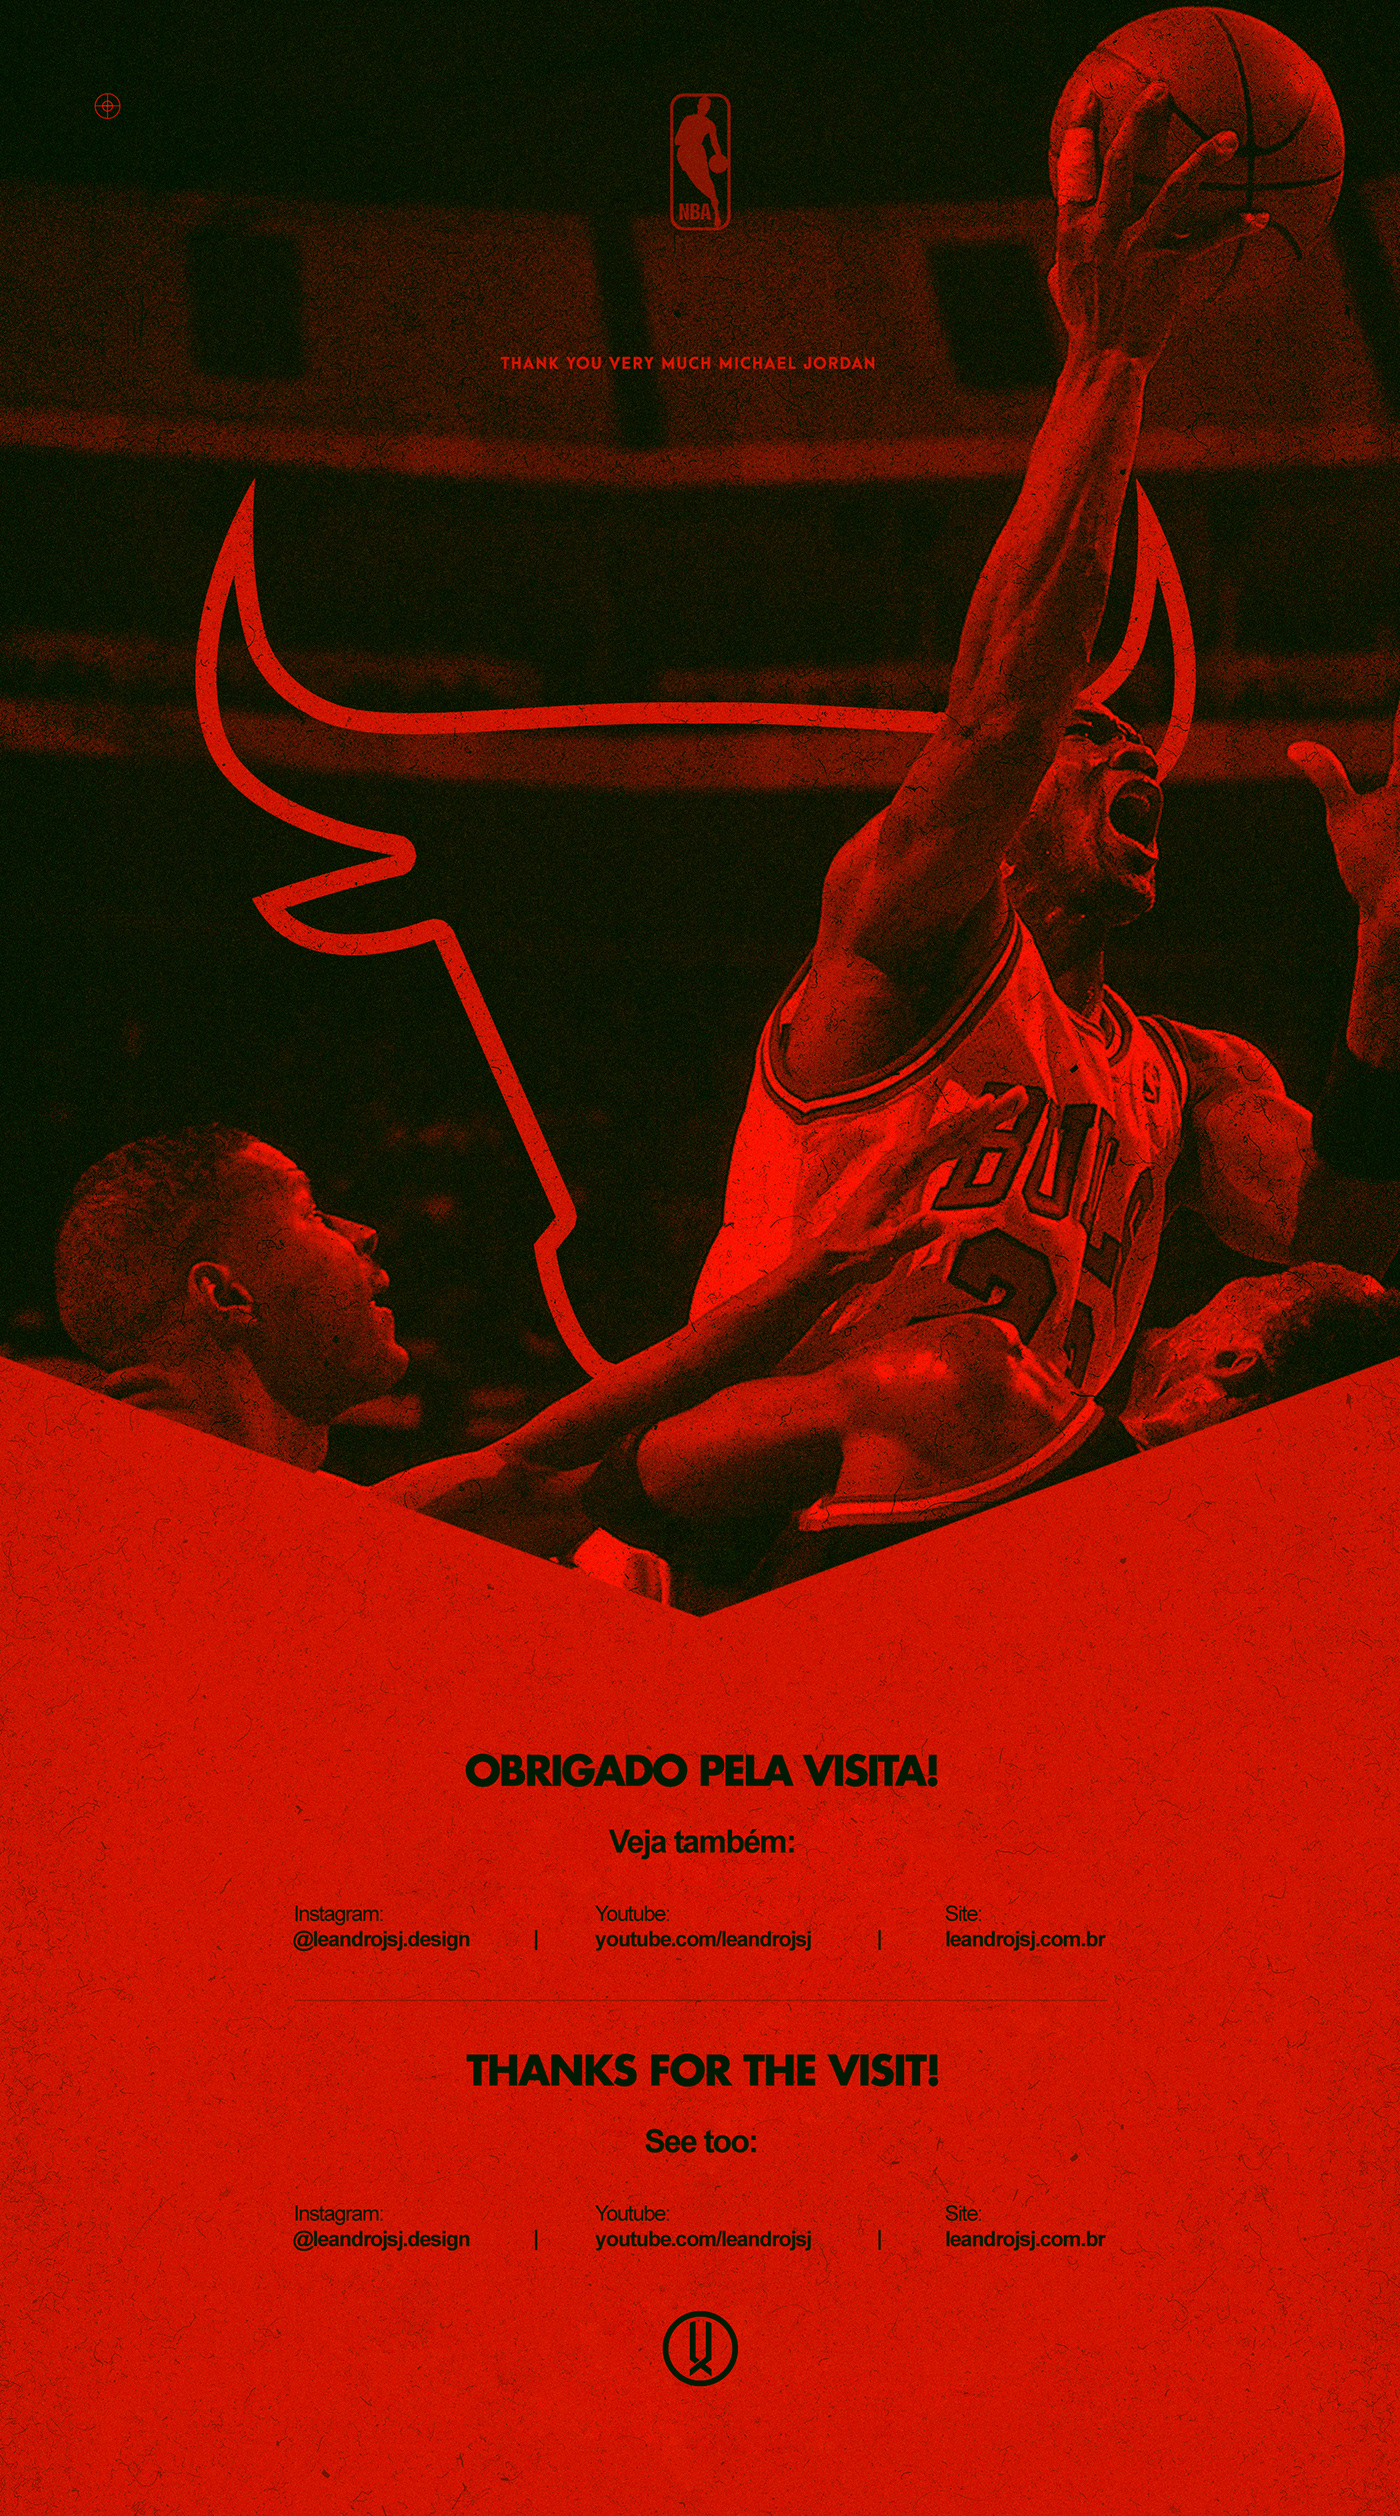 chicago bulls fanart michaeljordan poster artedigital Digital Art  Fan Art poster art Poster Design posters